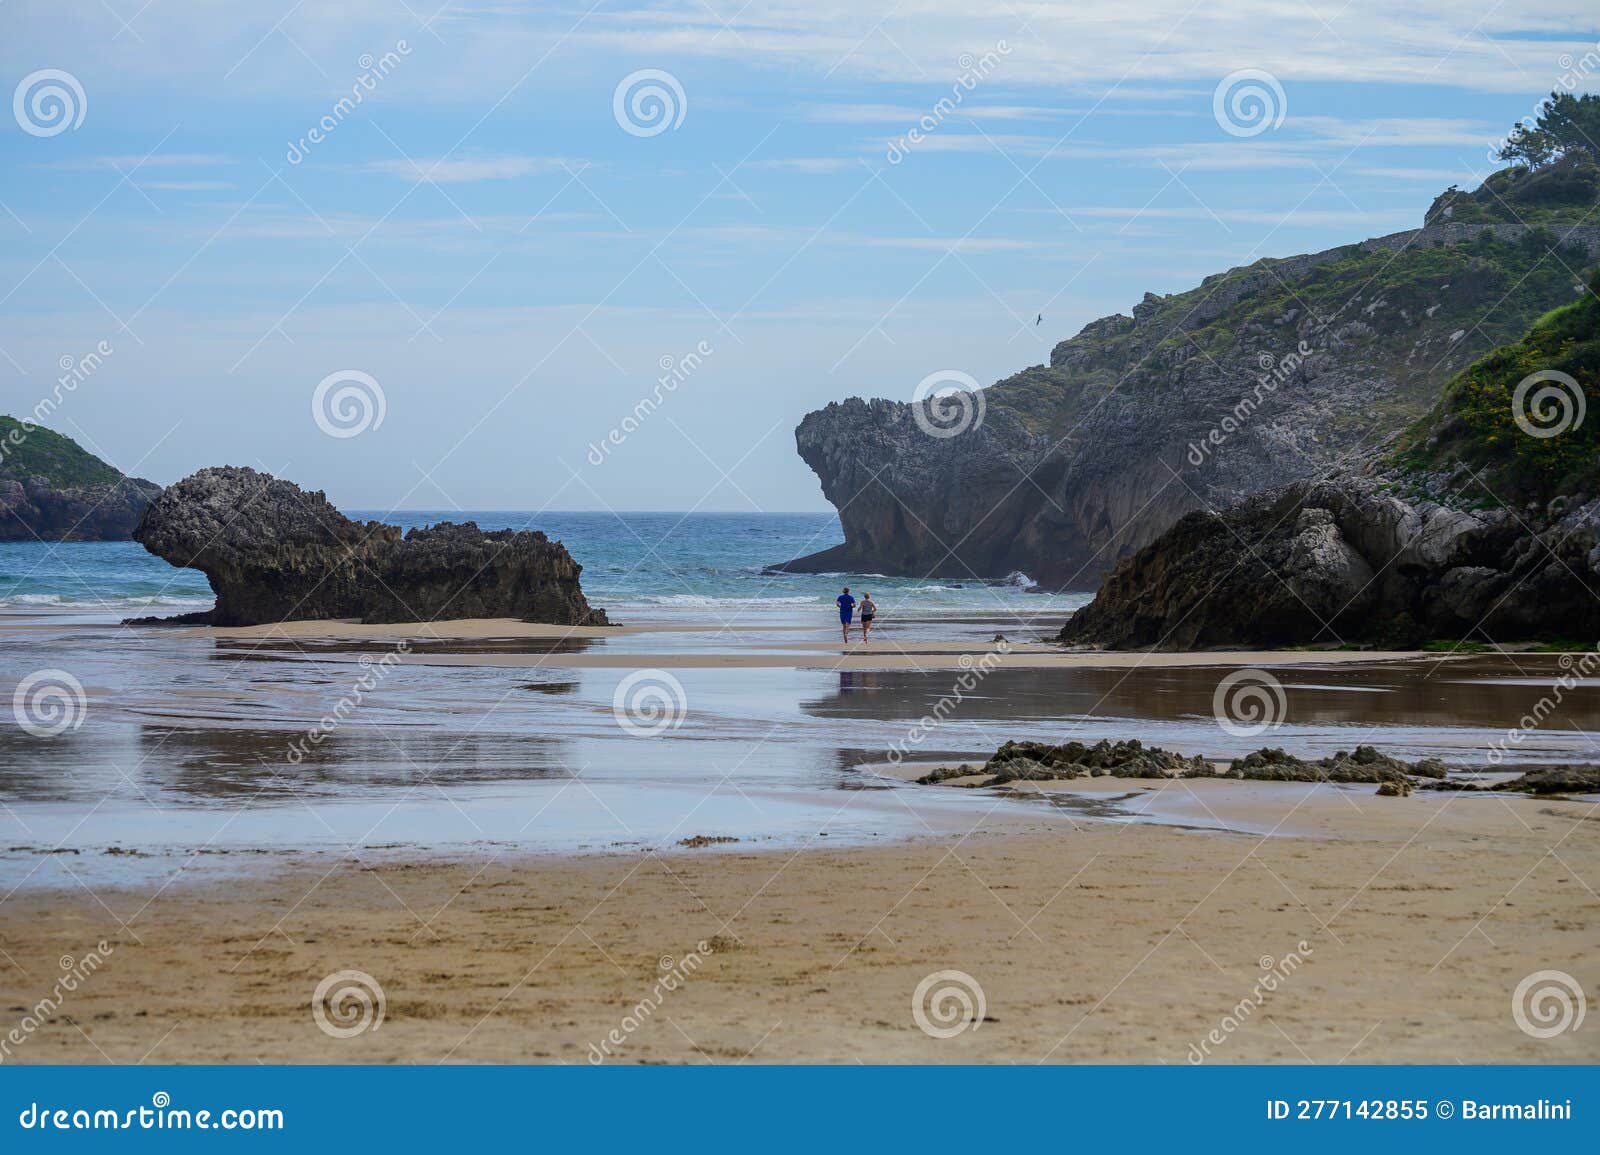 couple running on playa de palombina las camaras in celorio, green coast of asturias, north spain with sandy beaches, cliffs,